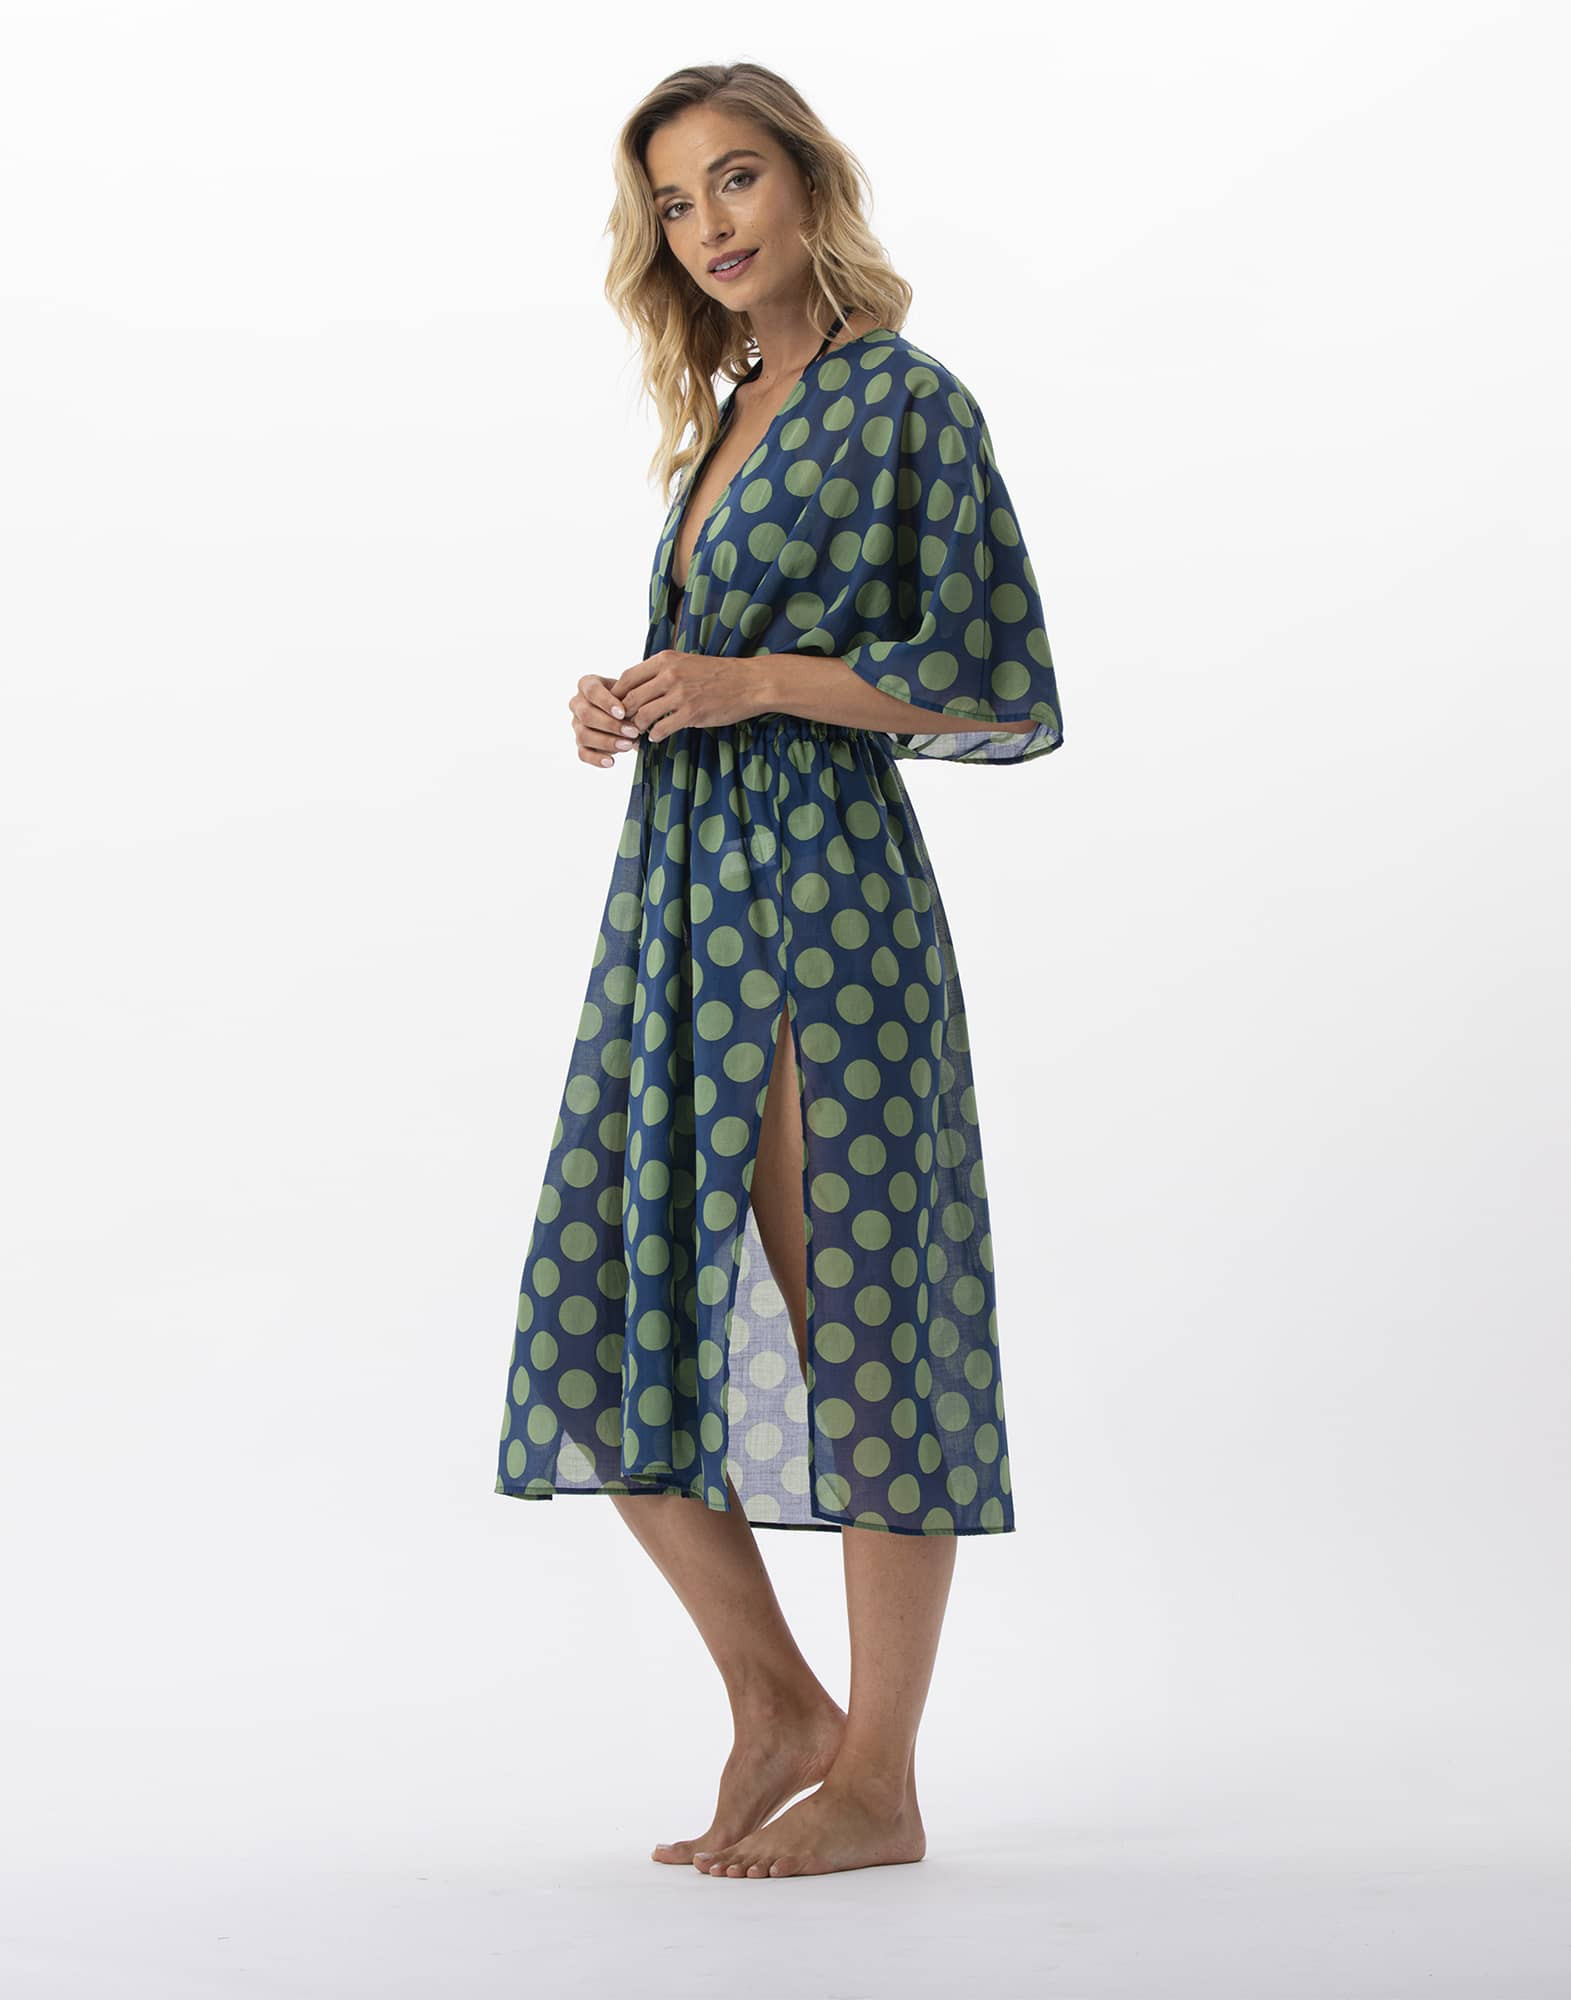 Polka dot printed kimono in 100% cotton RIVA 770 green